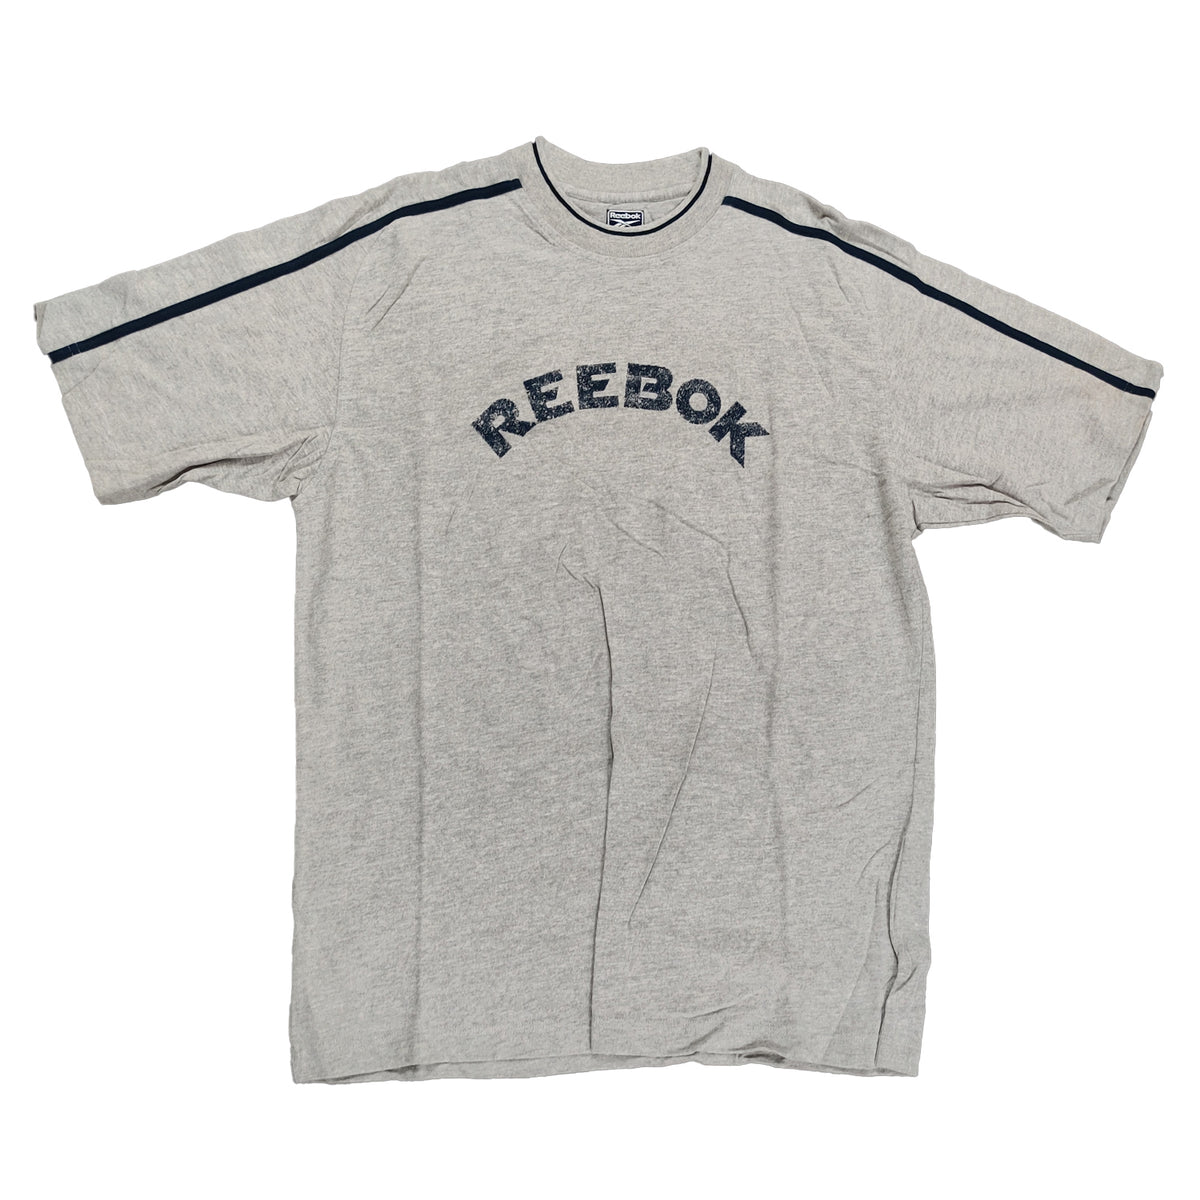 Reebok Mens Clearance One Line Crew T-Shirt - Medium